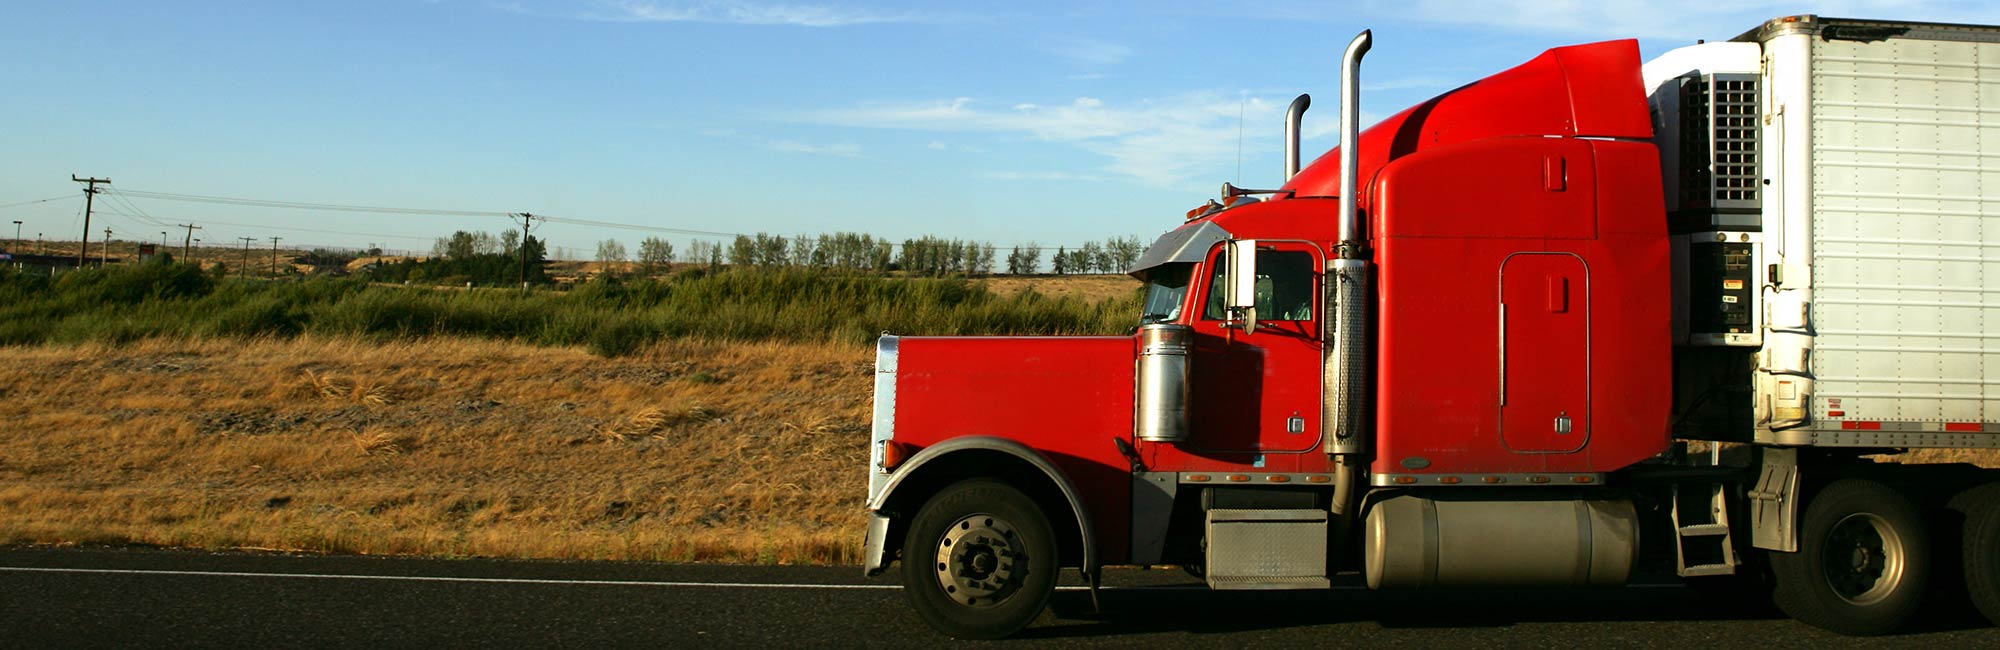 Red Semi-Truck